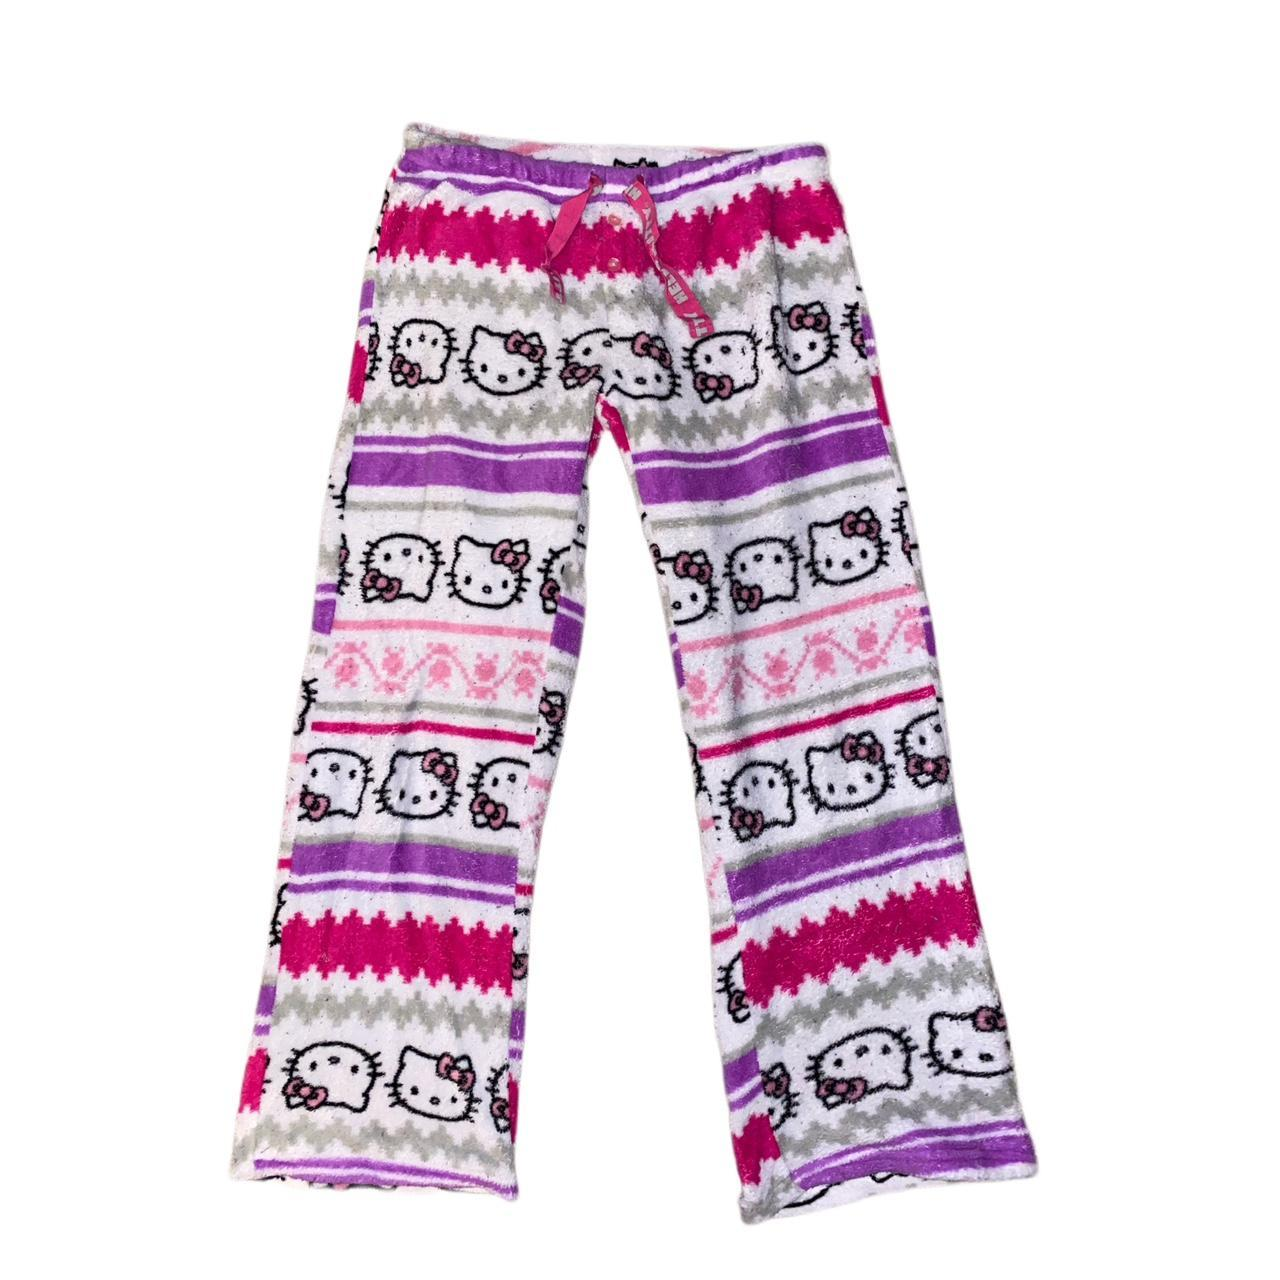 Women's Pink and Purple pajama pants